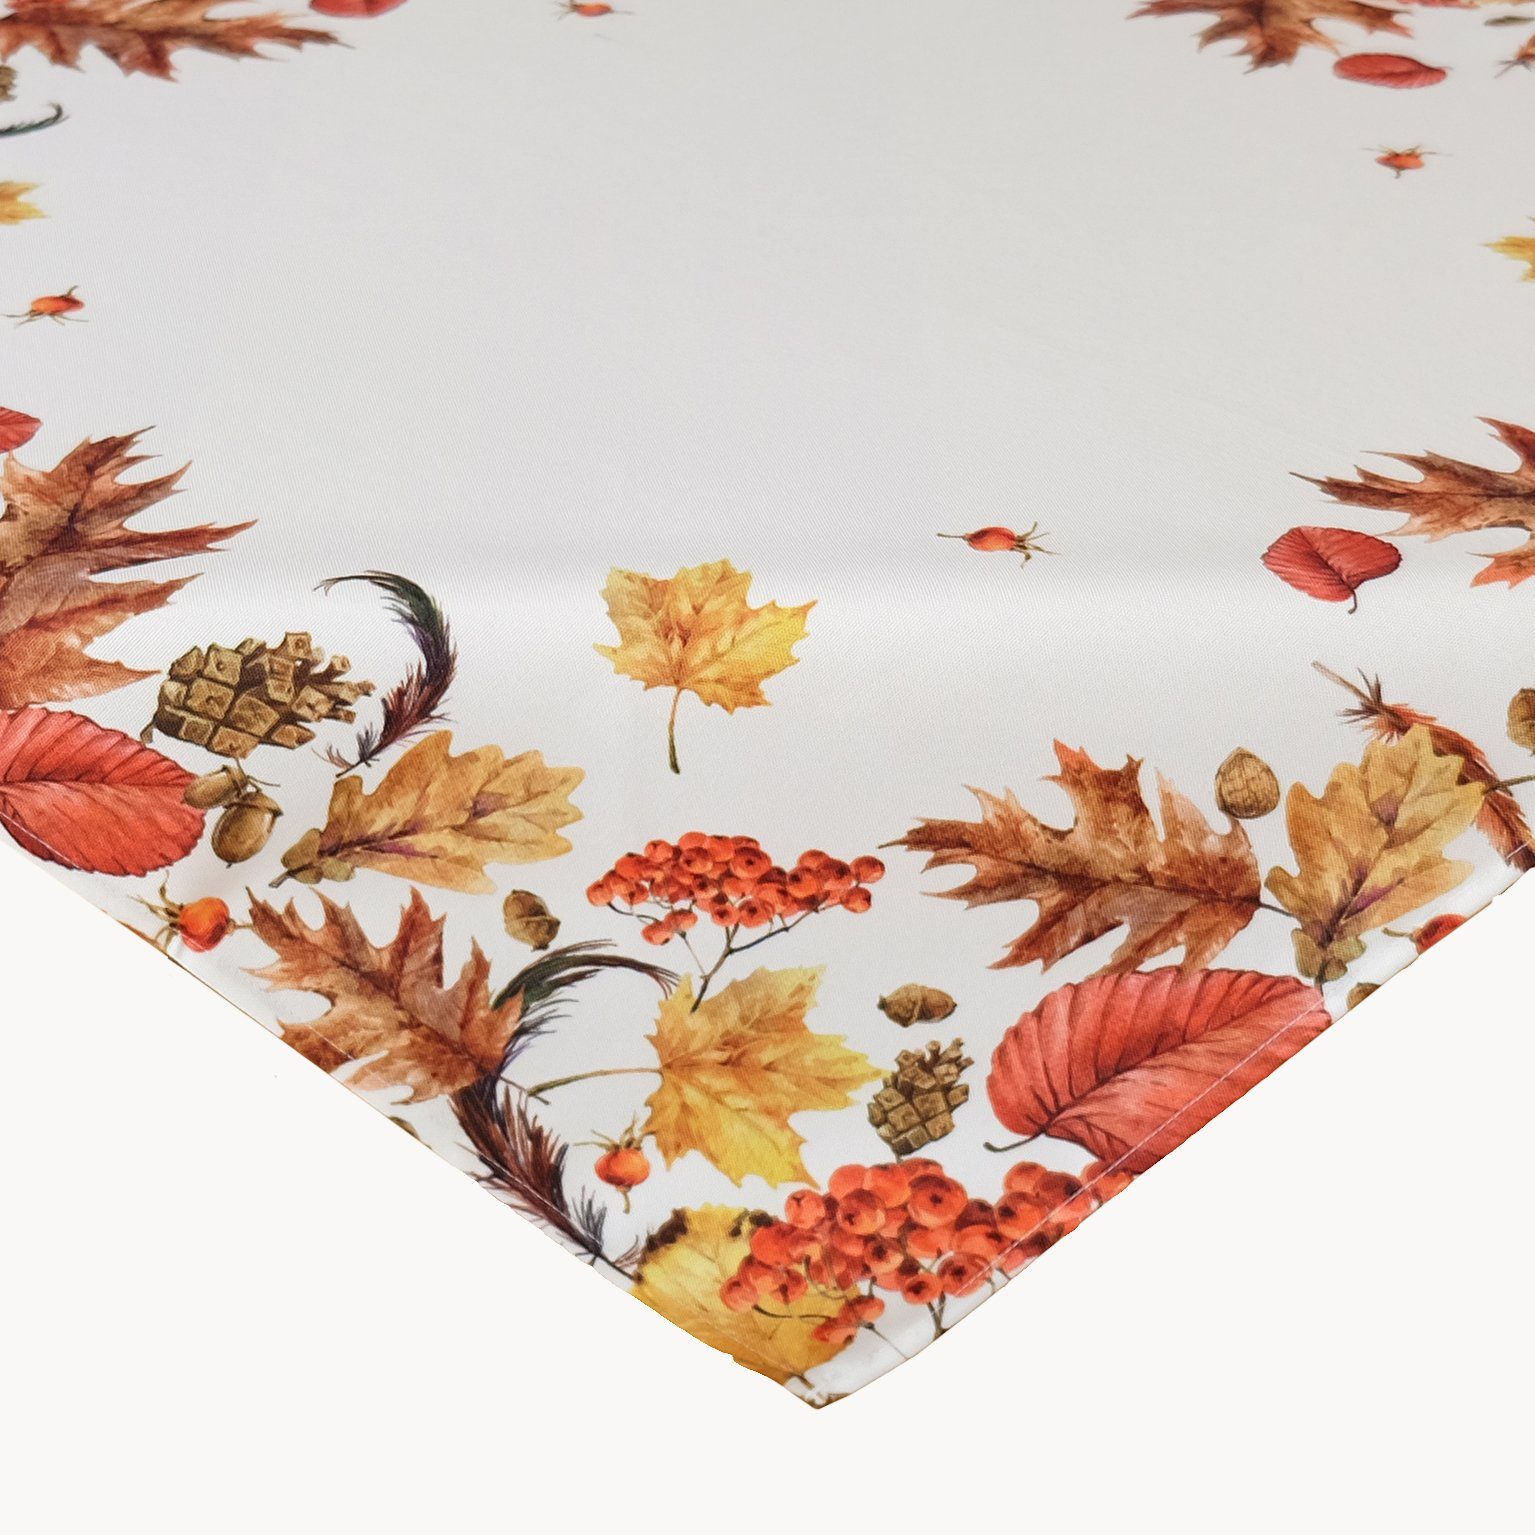 texpot Tischdecke Motiv Blätter - Creme Weiß Beige Bunt Herbst, bedruckt